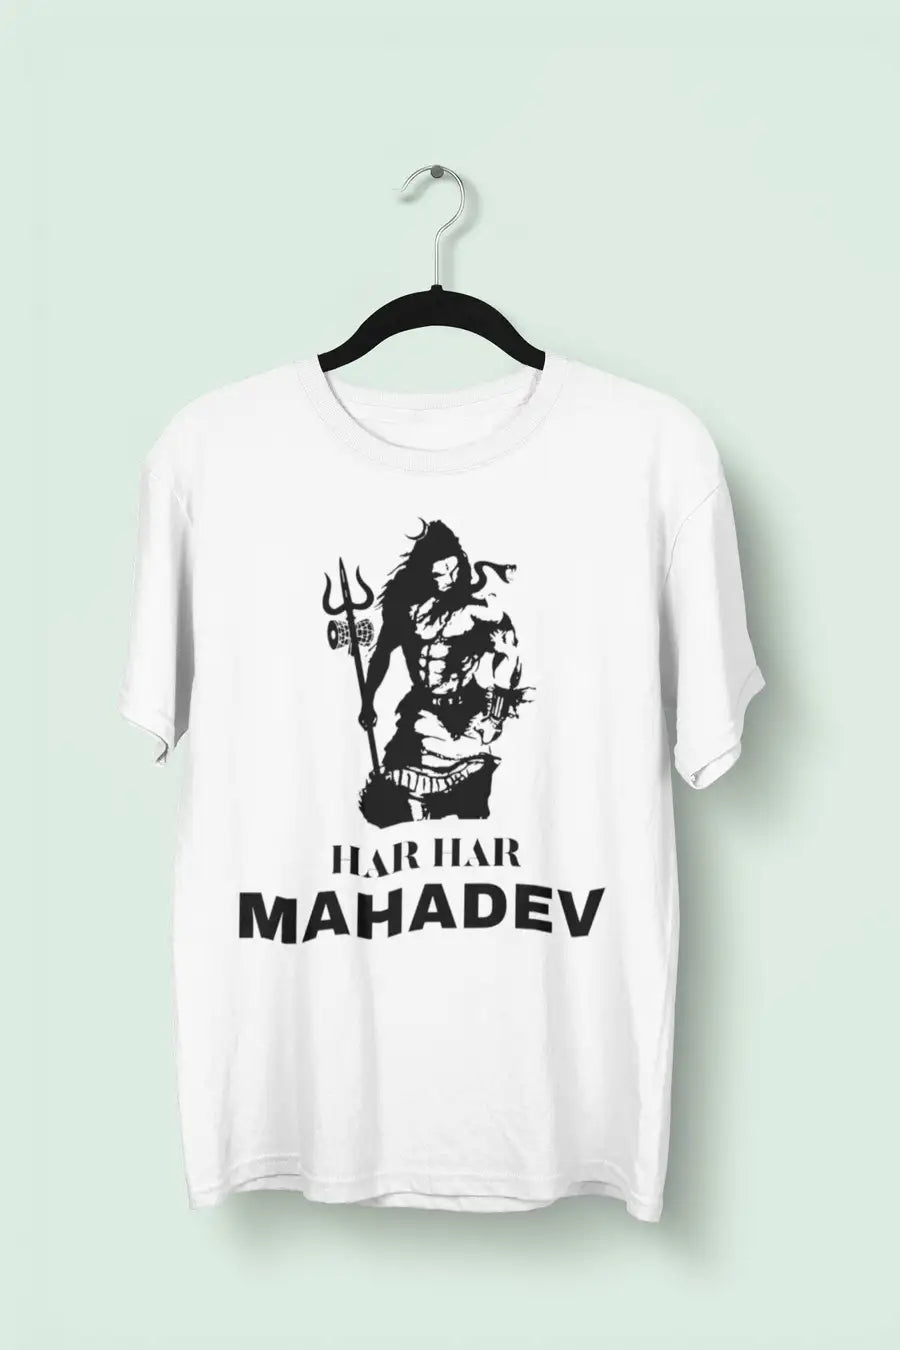 HAR HAR MAHADEV Exclusive White T-Shirt for Men | Premium Design | Catch My Drift India - Catch My Drift India Clothing clothing, indian, lord shiva, made in india, religious, shirt, shiv, t 